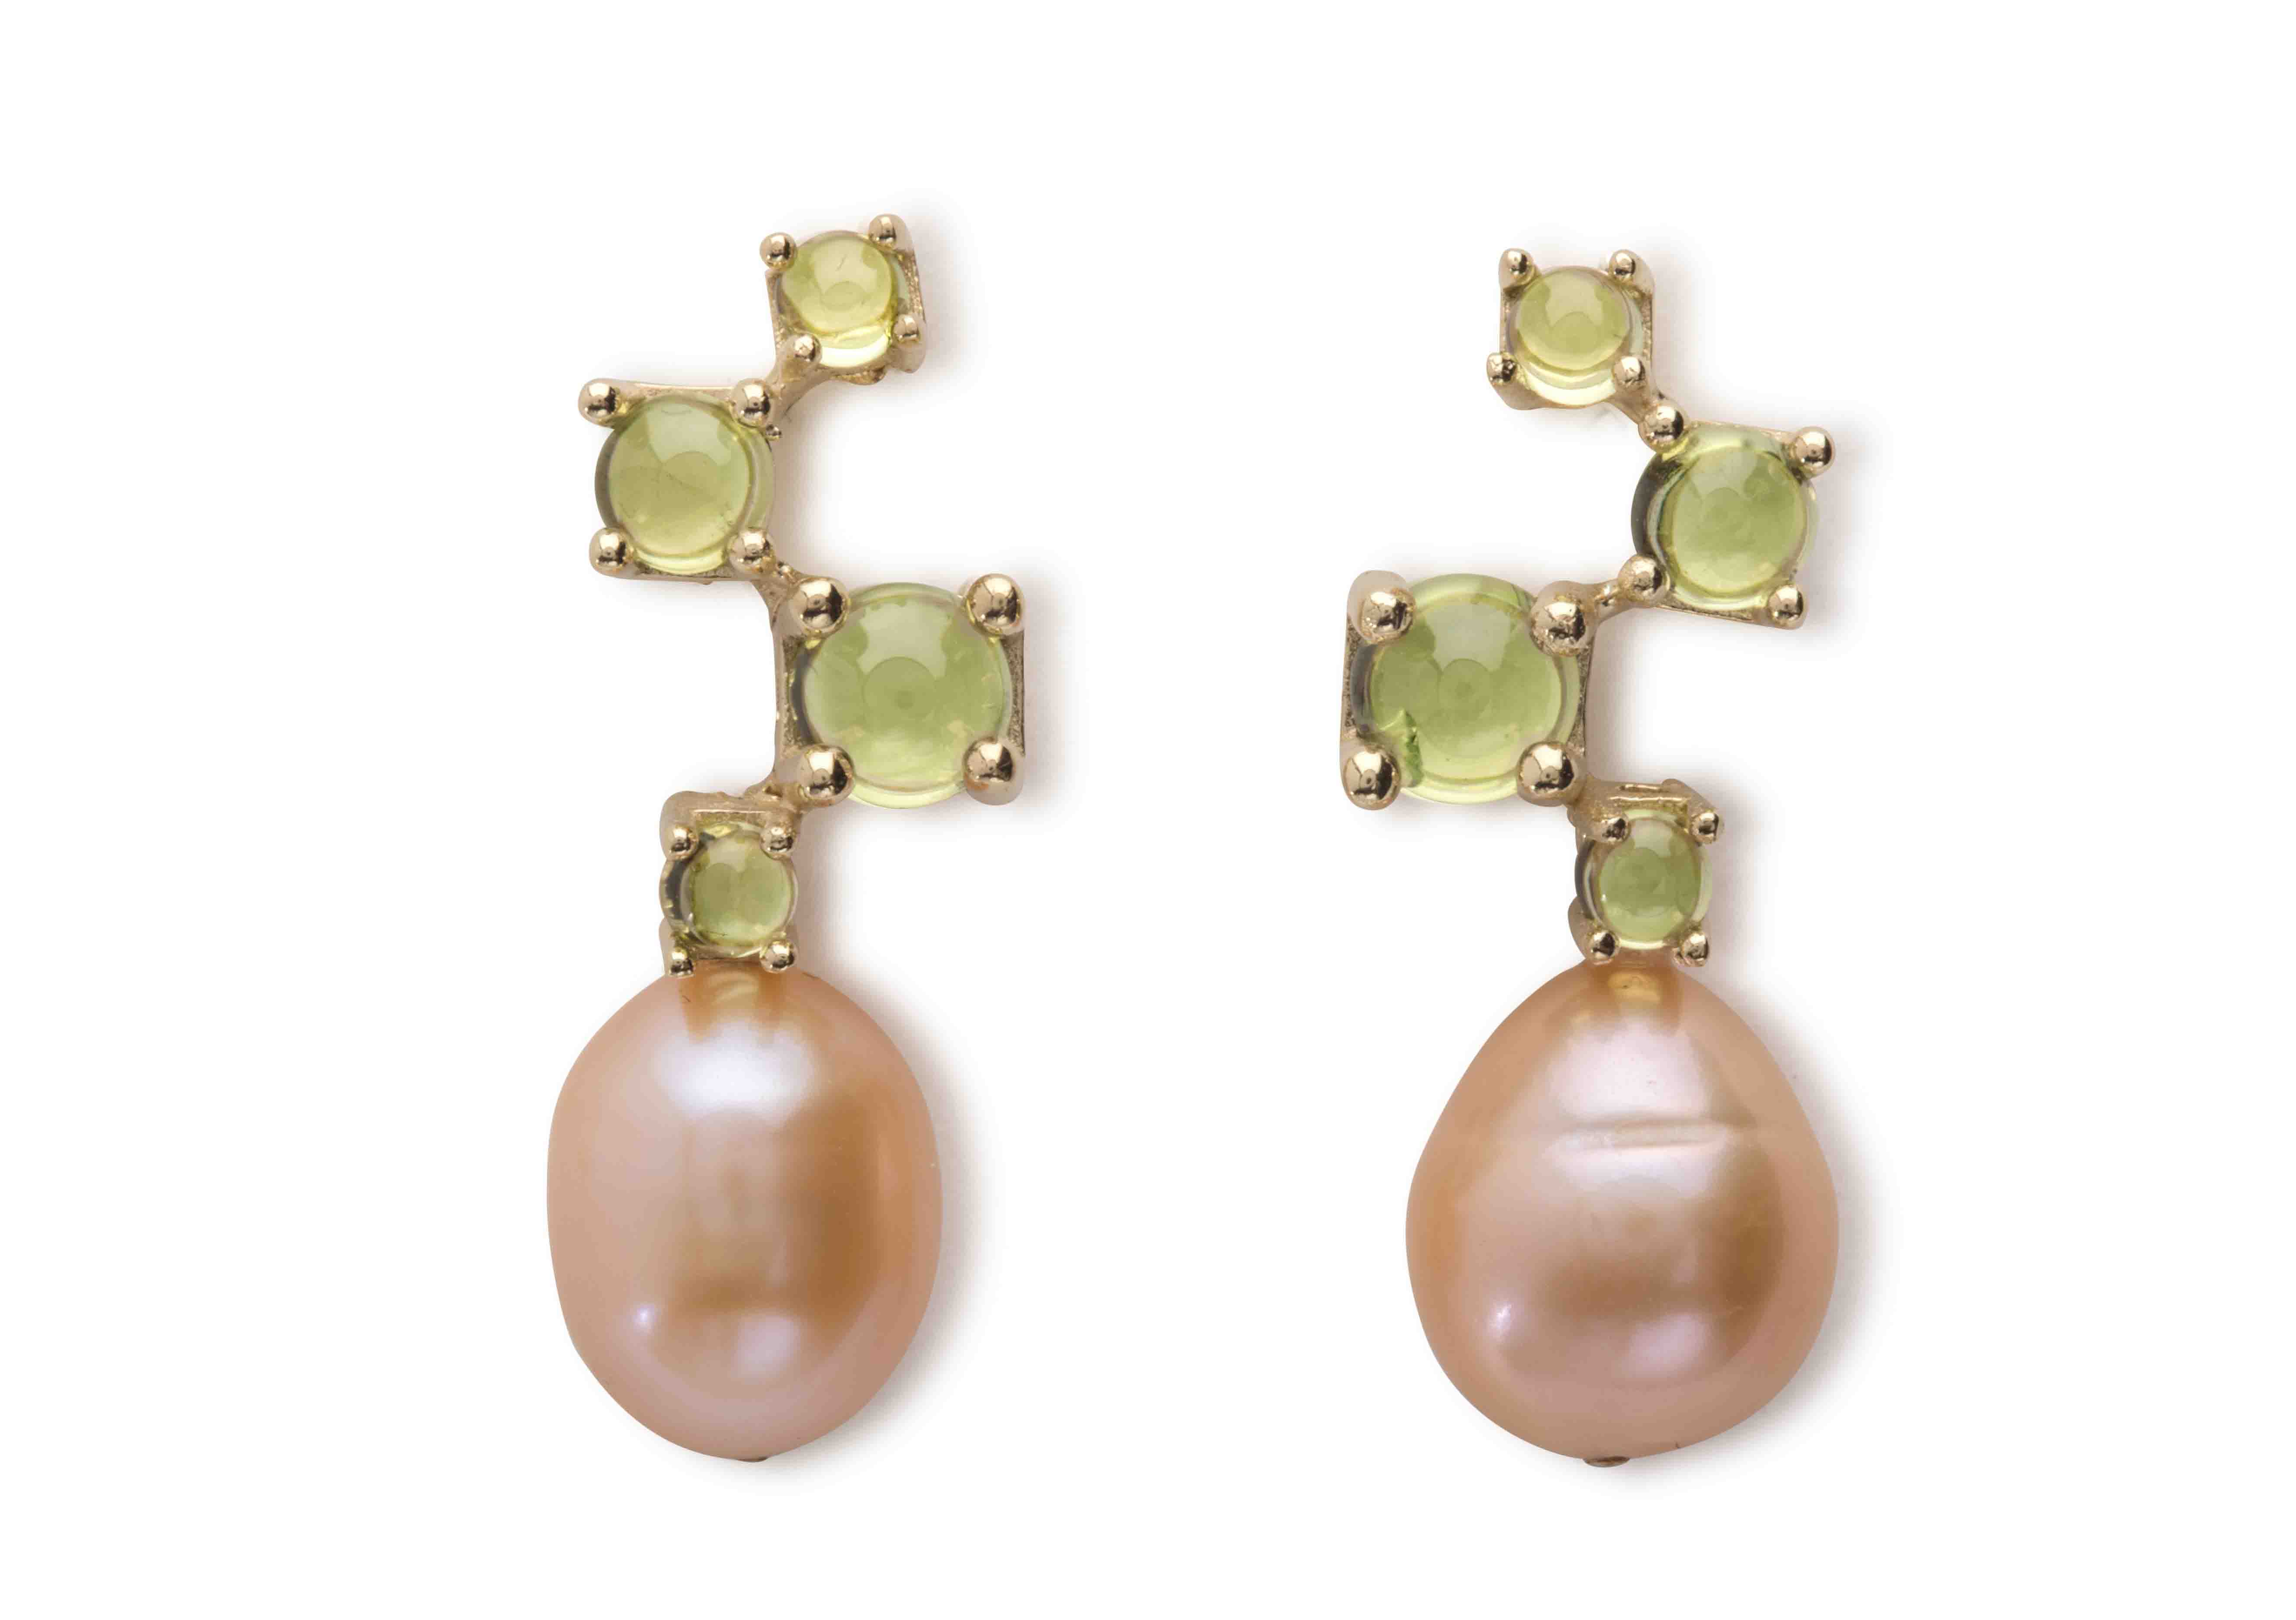 Details about   Lovely Green Peridot Gemstone Earrings 5.05 Ct Briolette 14k Rose Gold Jewelry 